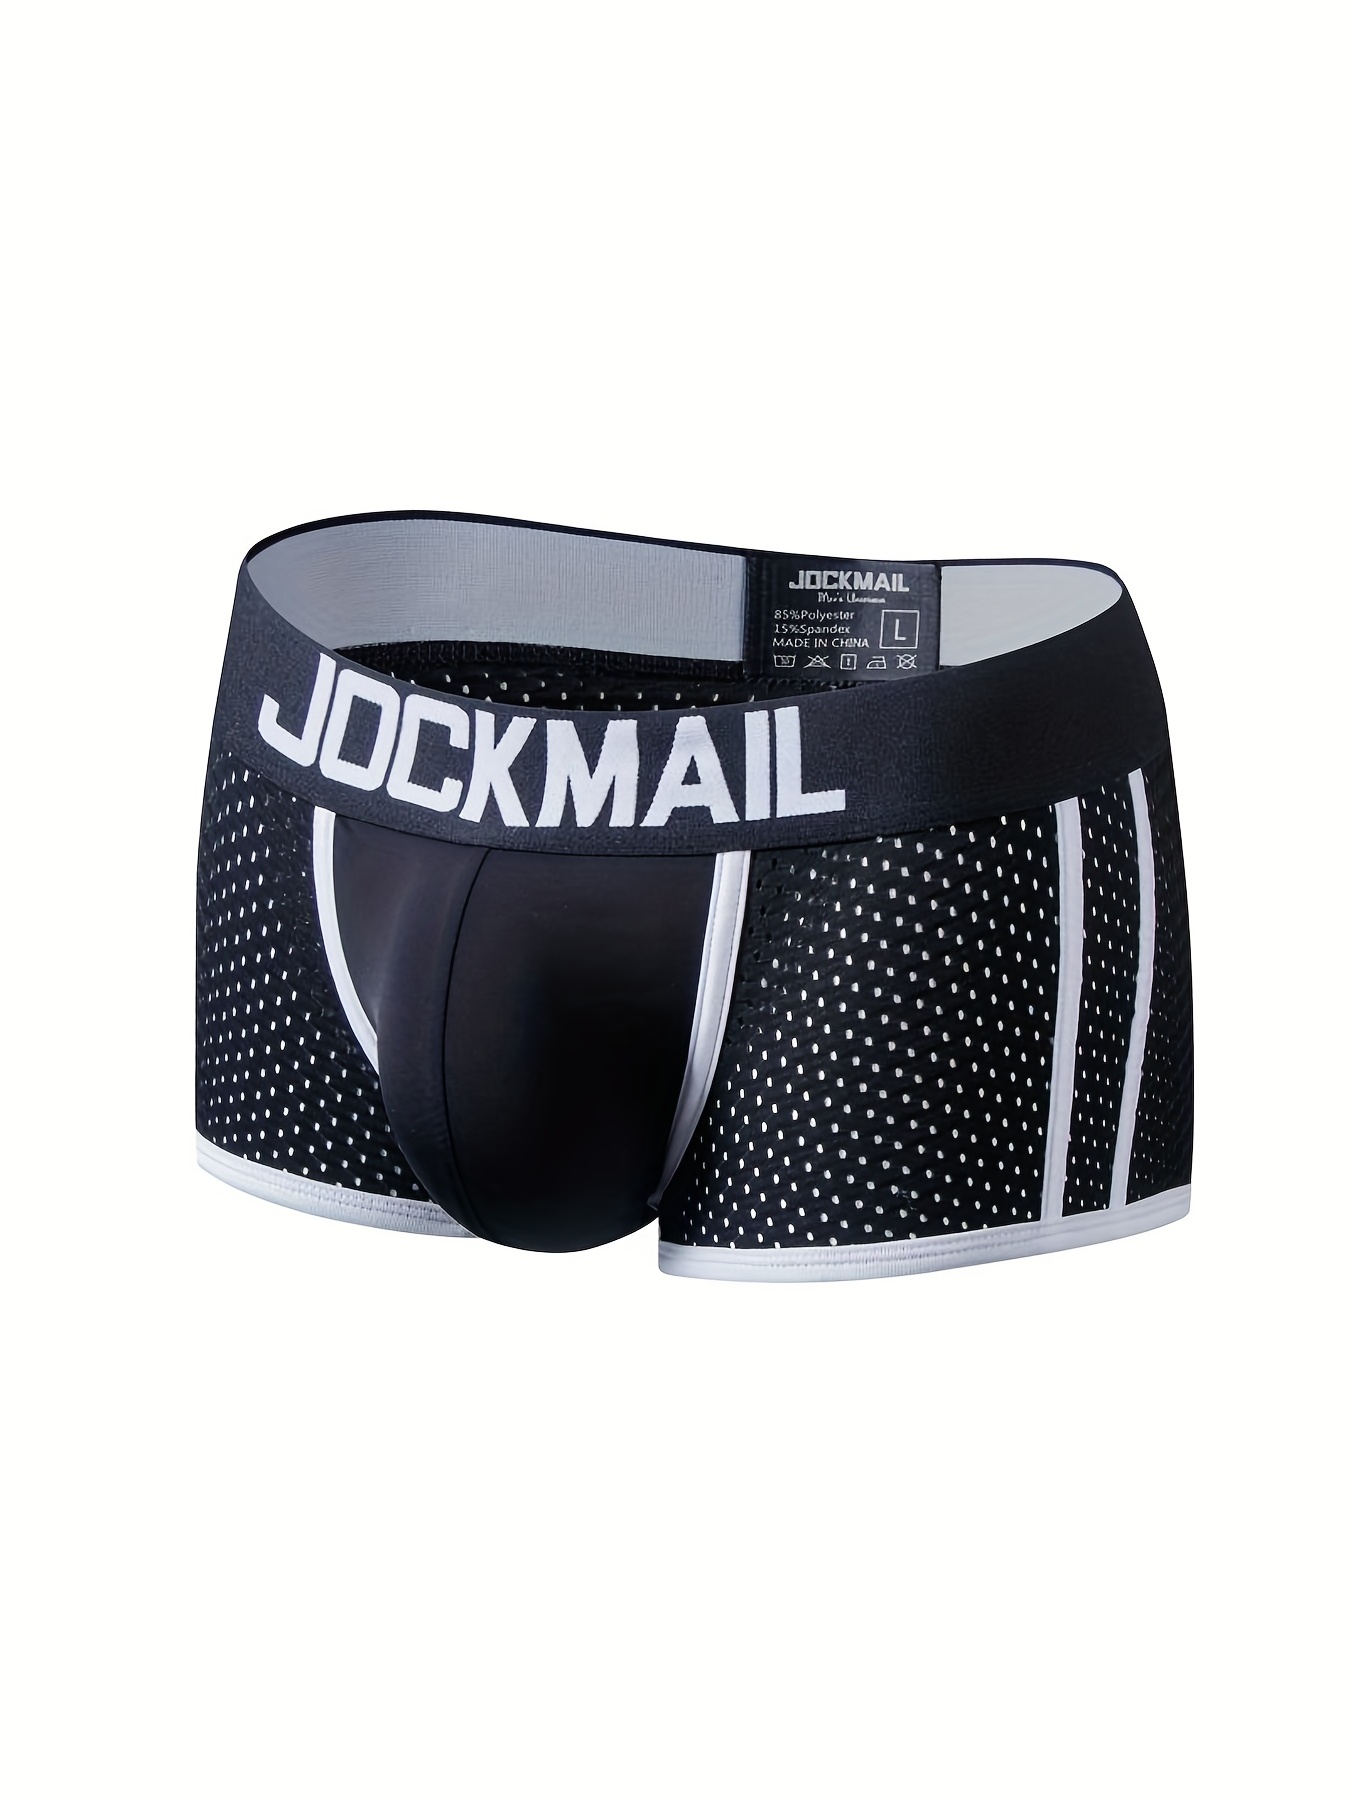 JOCKMAIL Mesh Athletic Supporters Mens Briefs Underwear Comfort Male  Underwear for Gym Sport (as1, alpha, m, regular, regular, Black) at   Men's Clothing store